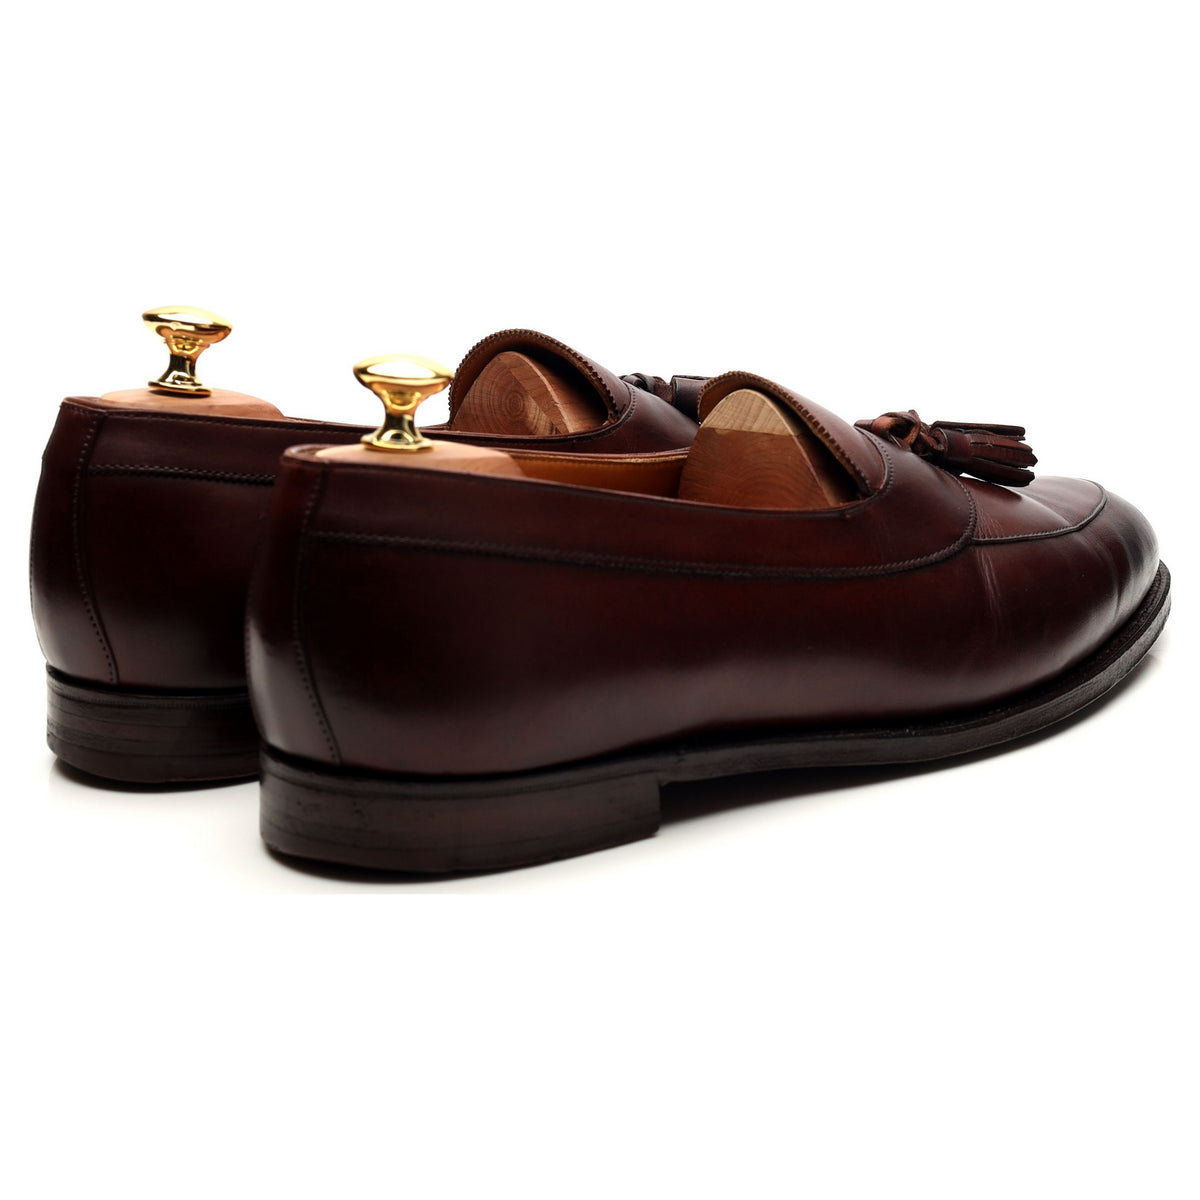 Brown Leather Tassel Loafers UK 11 EE